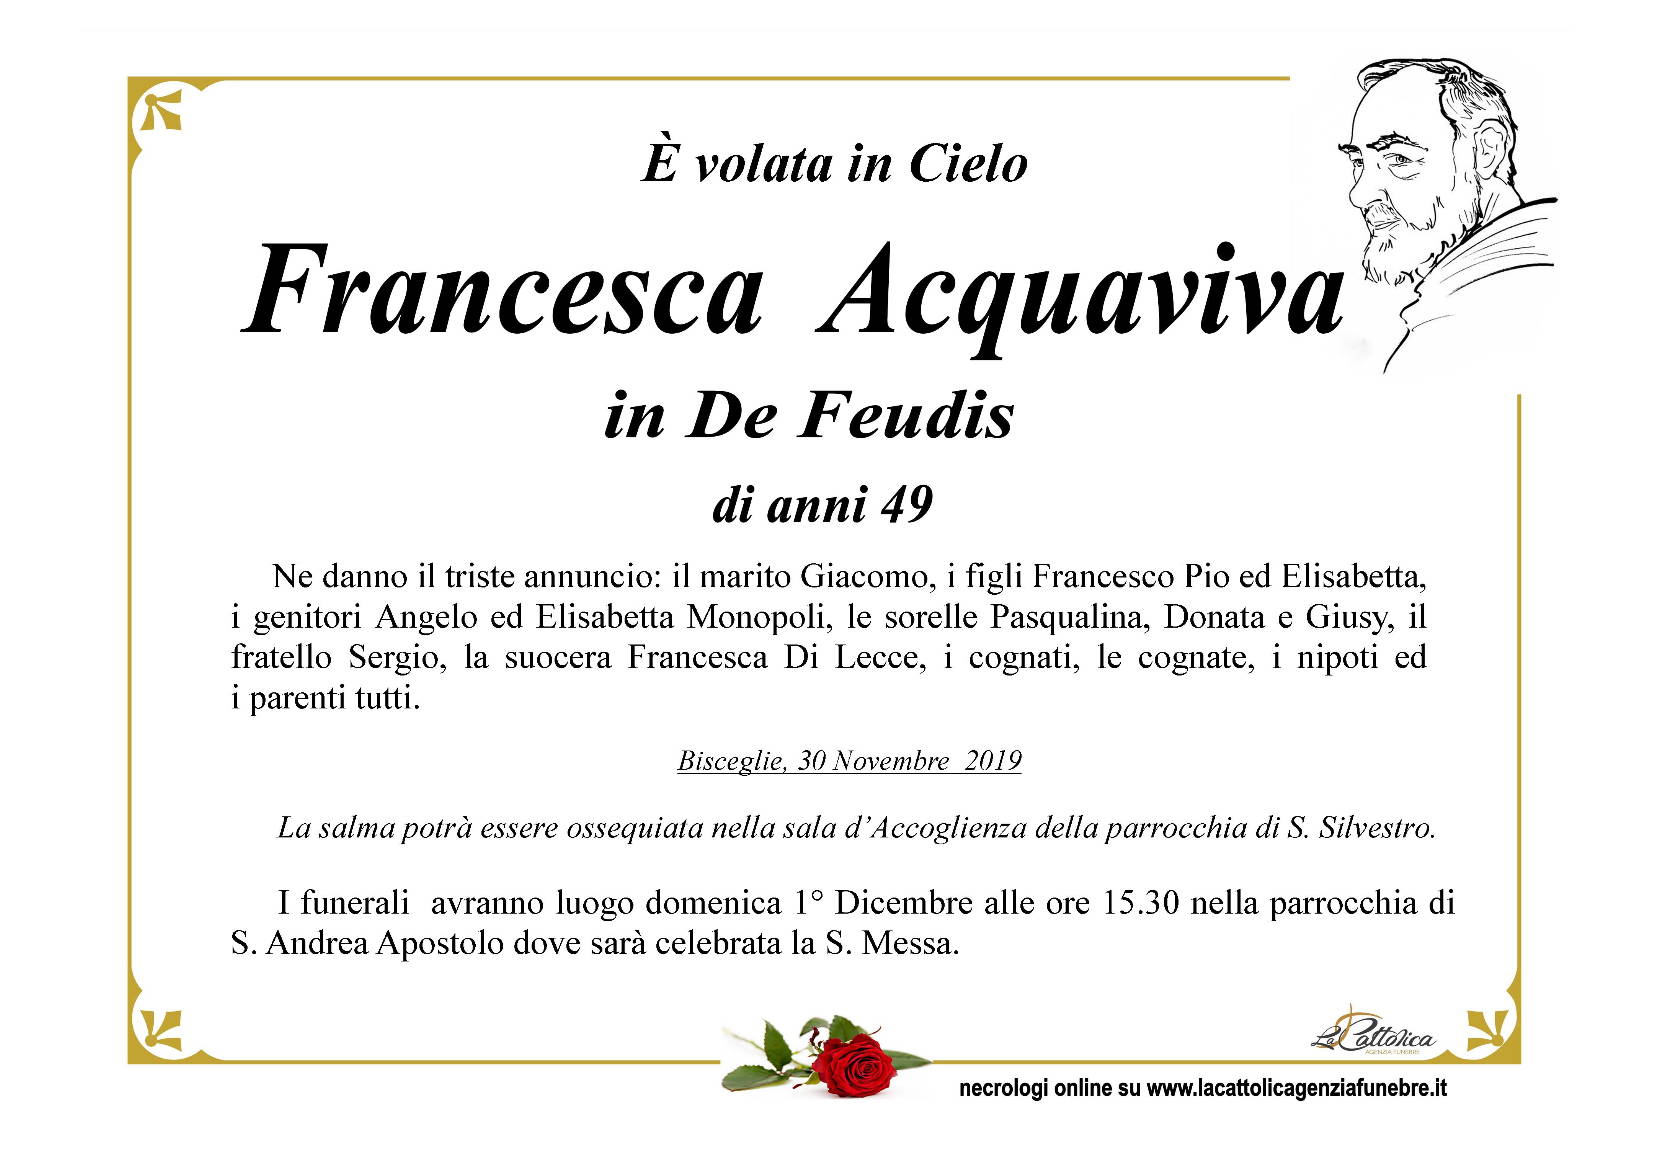 Francesca Acquaviva